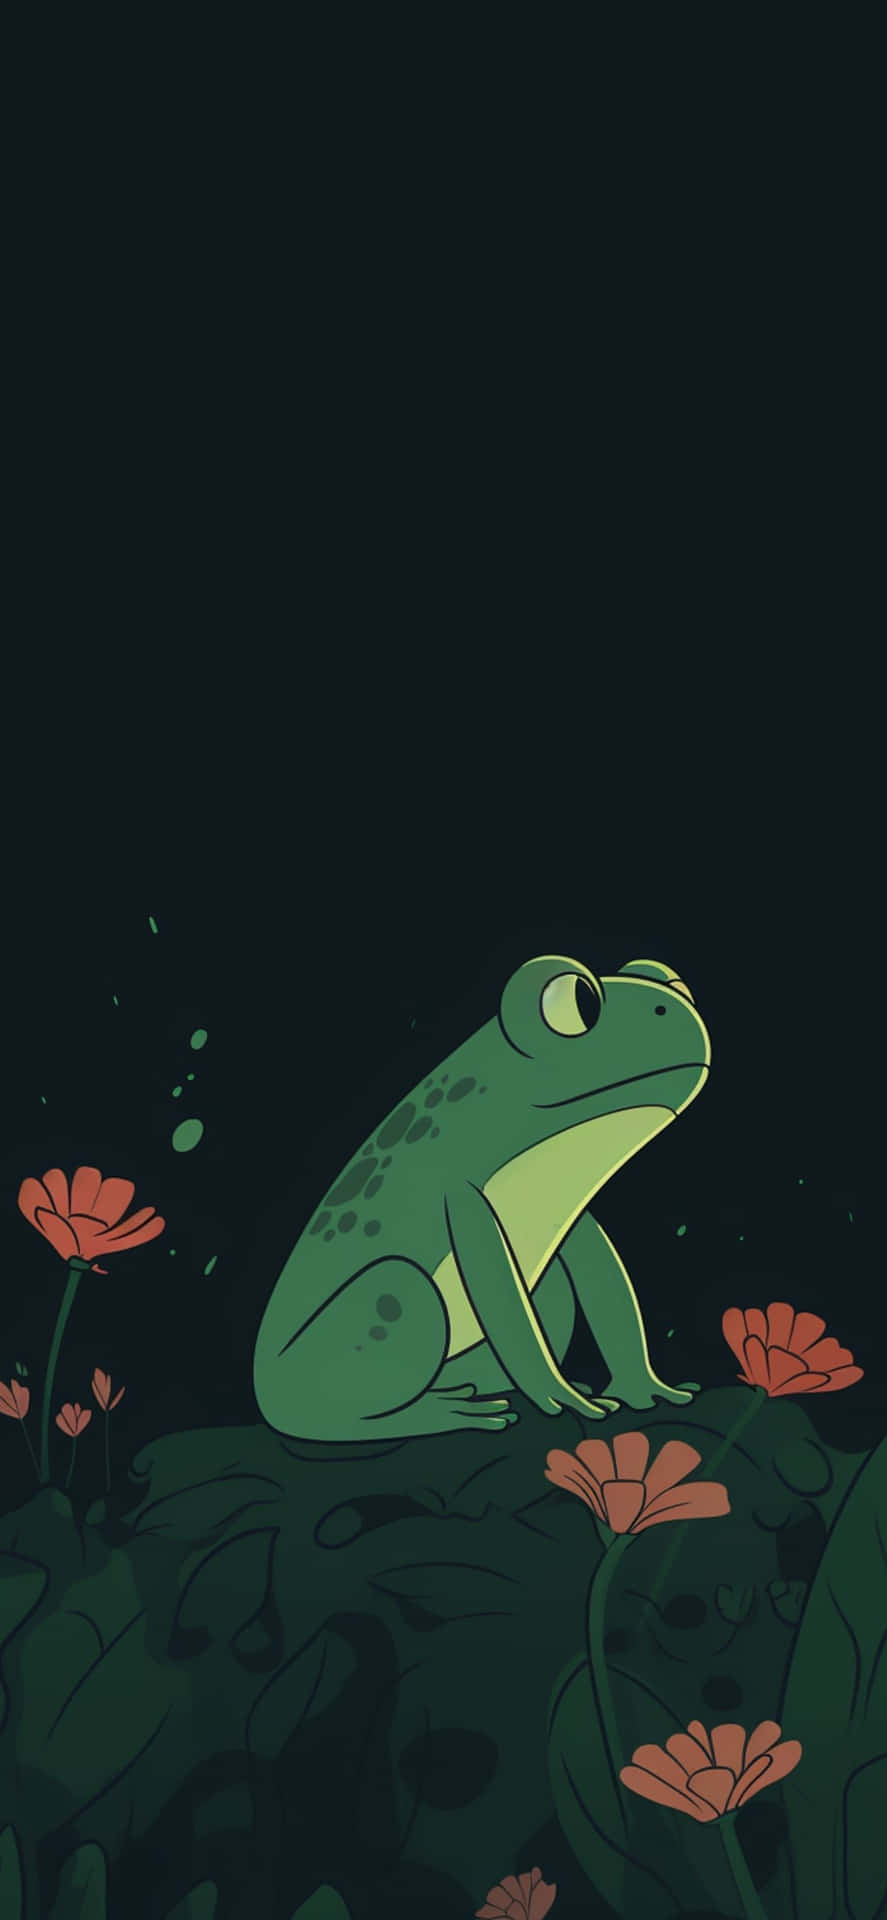 Green Frog Nighttime Illustration Wallpaper